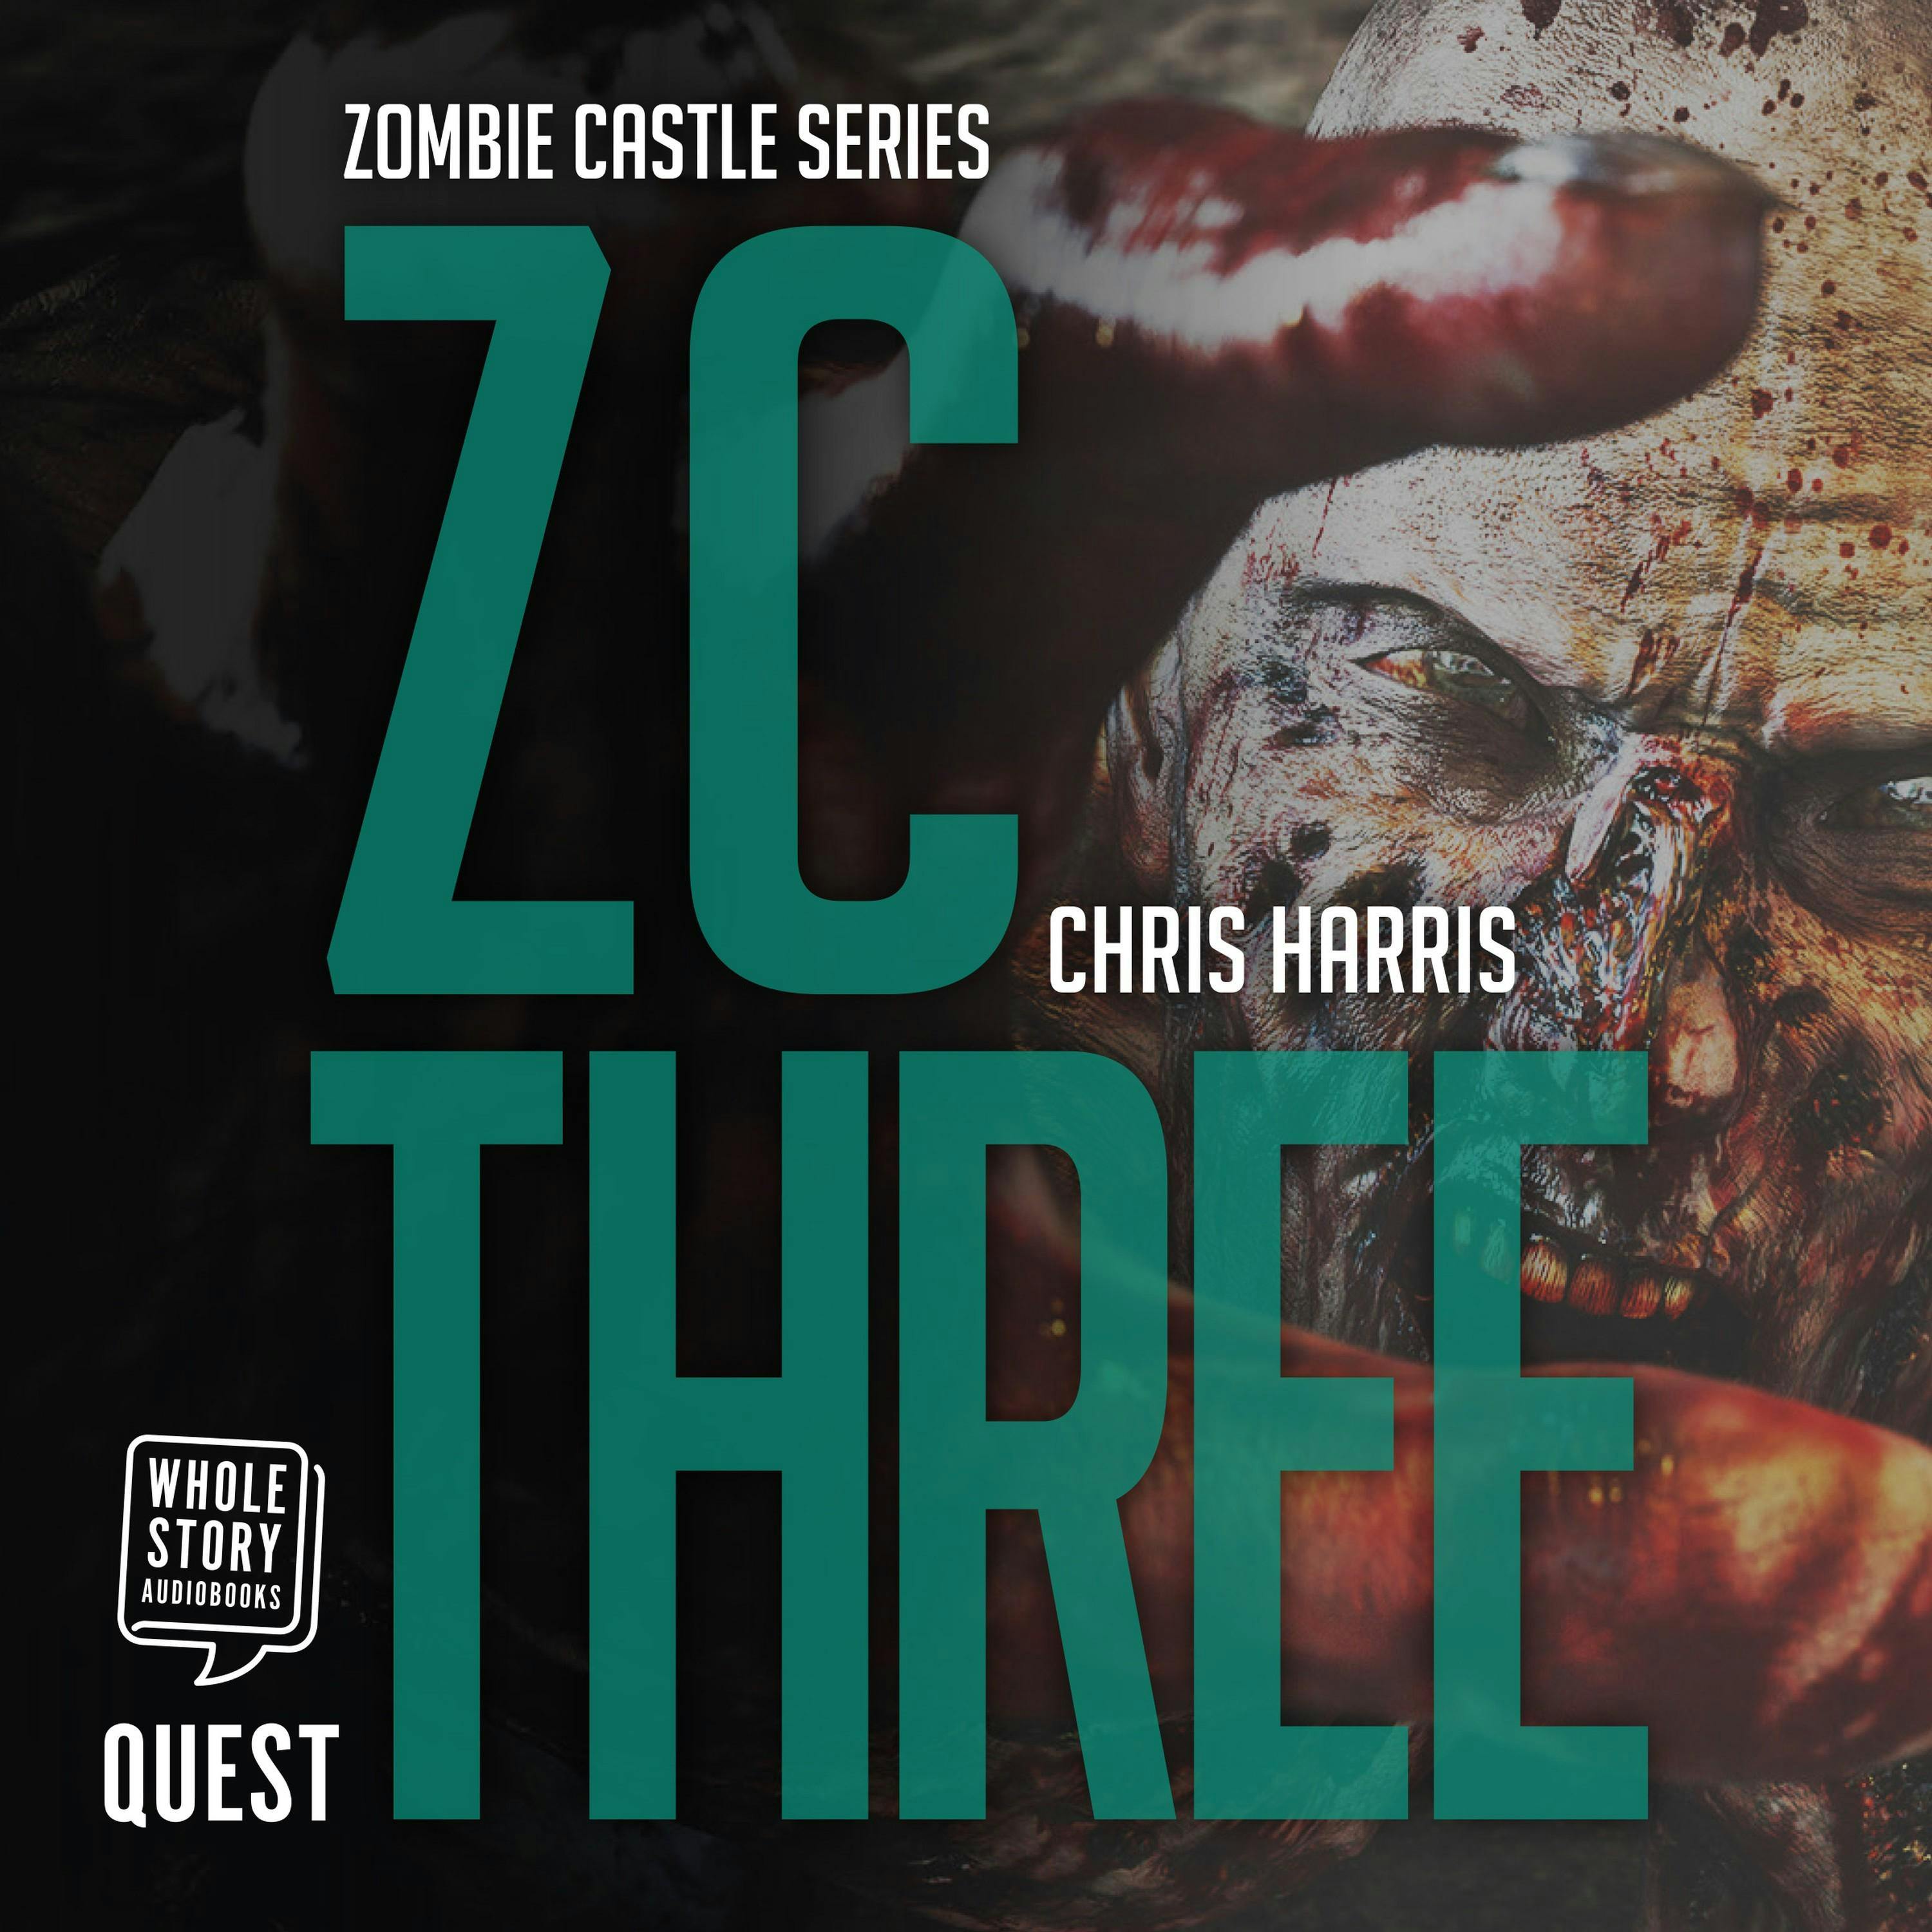 ZC Three: Zombie Castle Series - Chris Harris